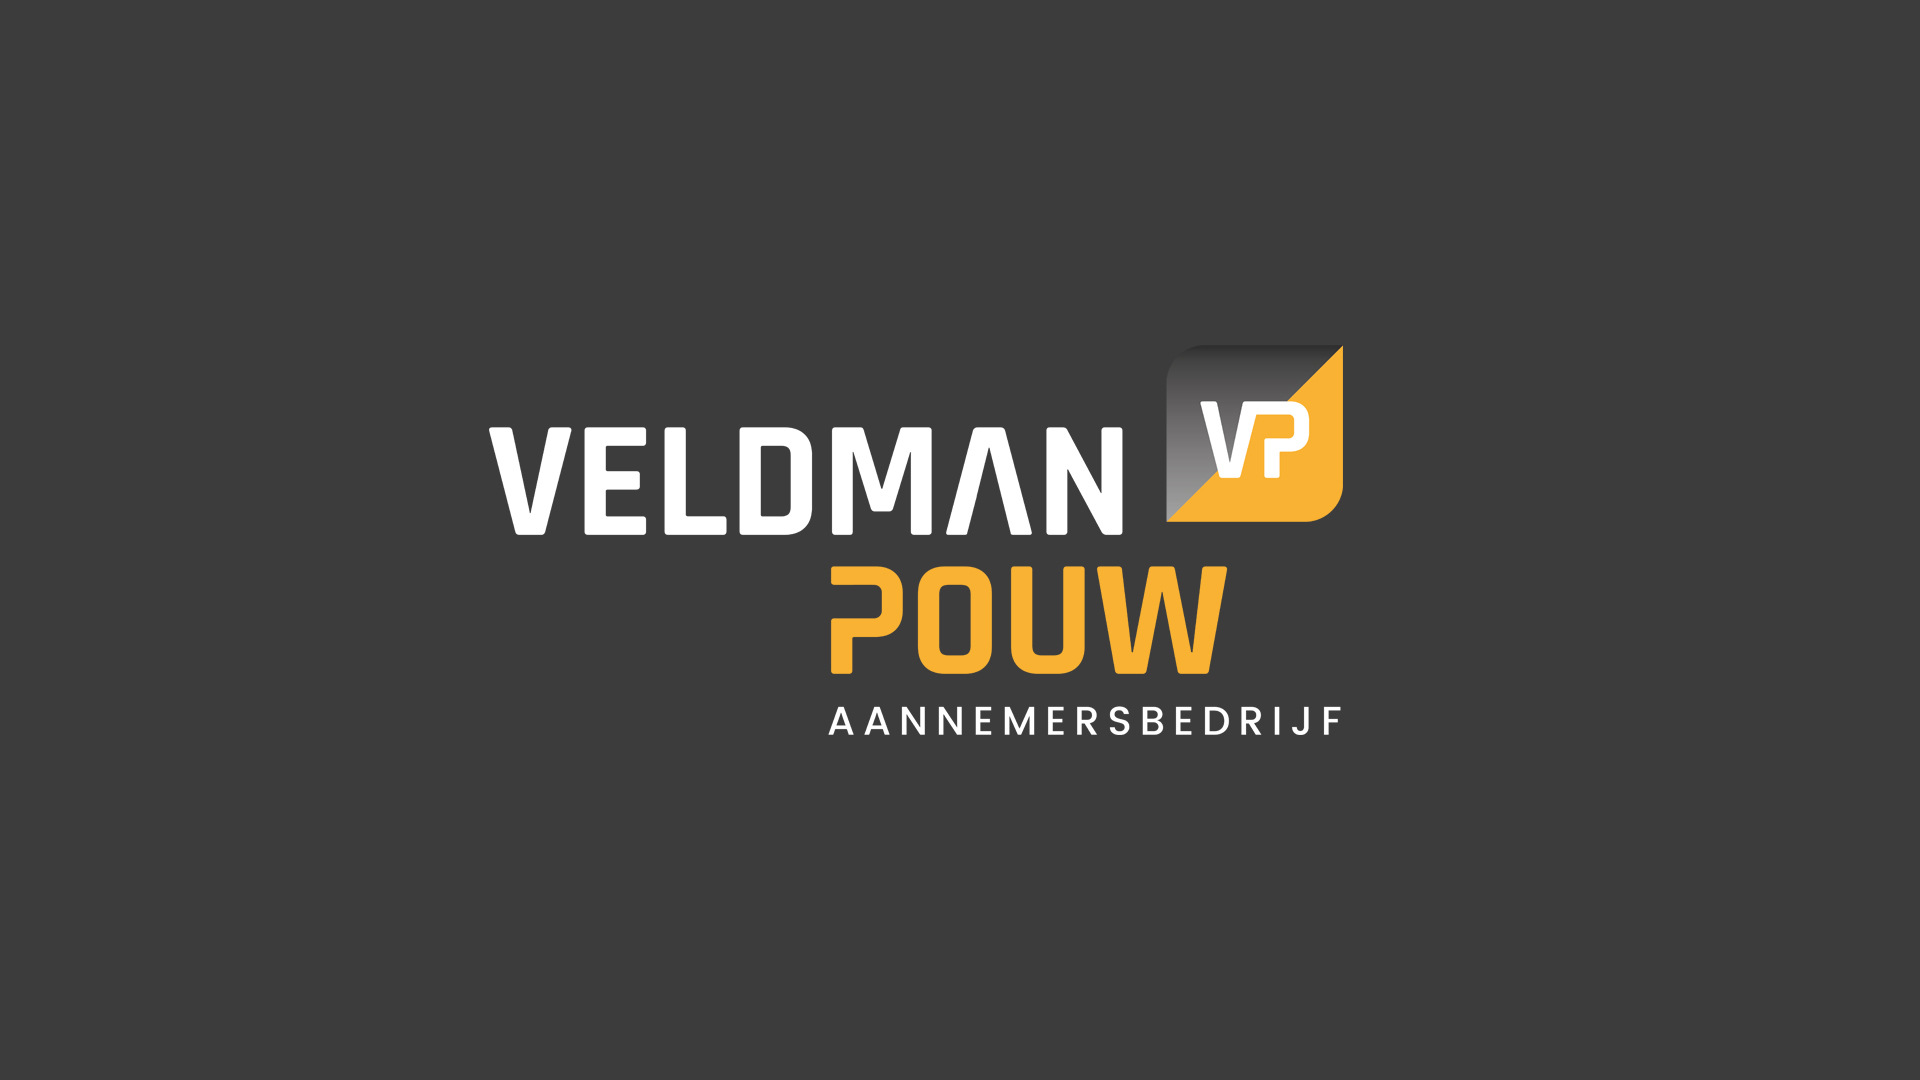 VeldmanPouw